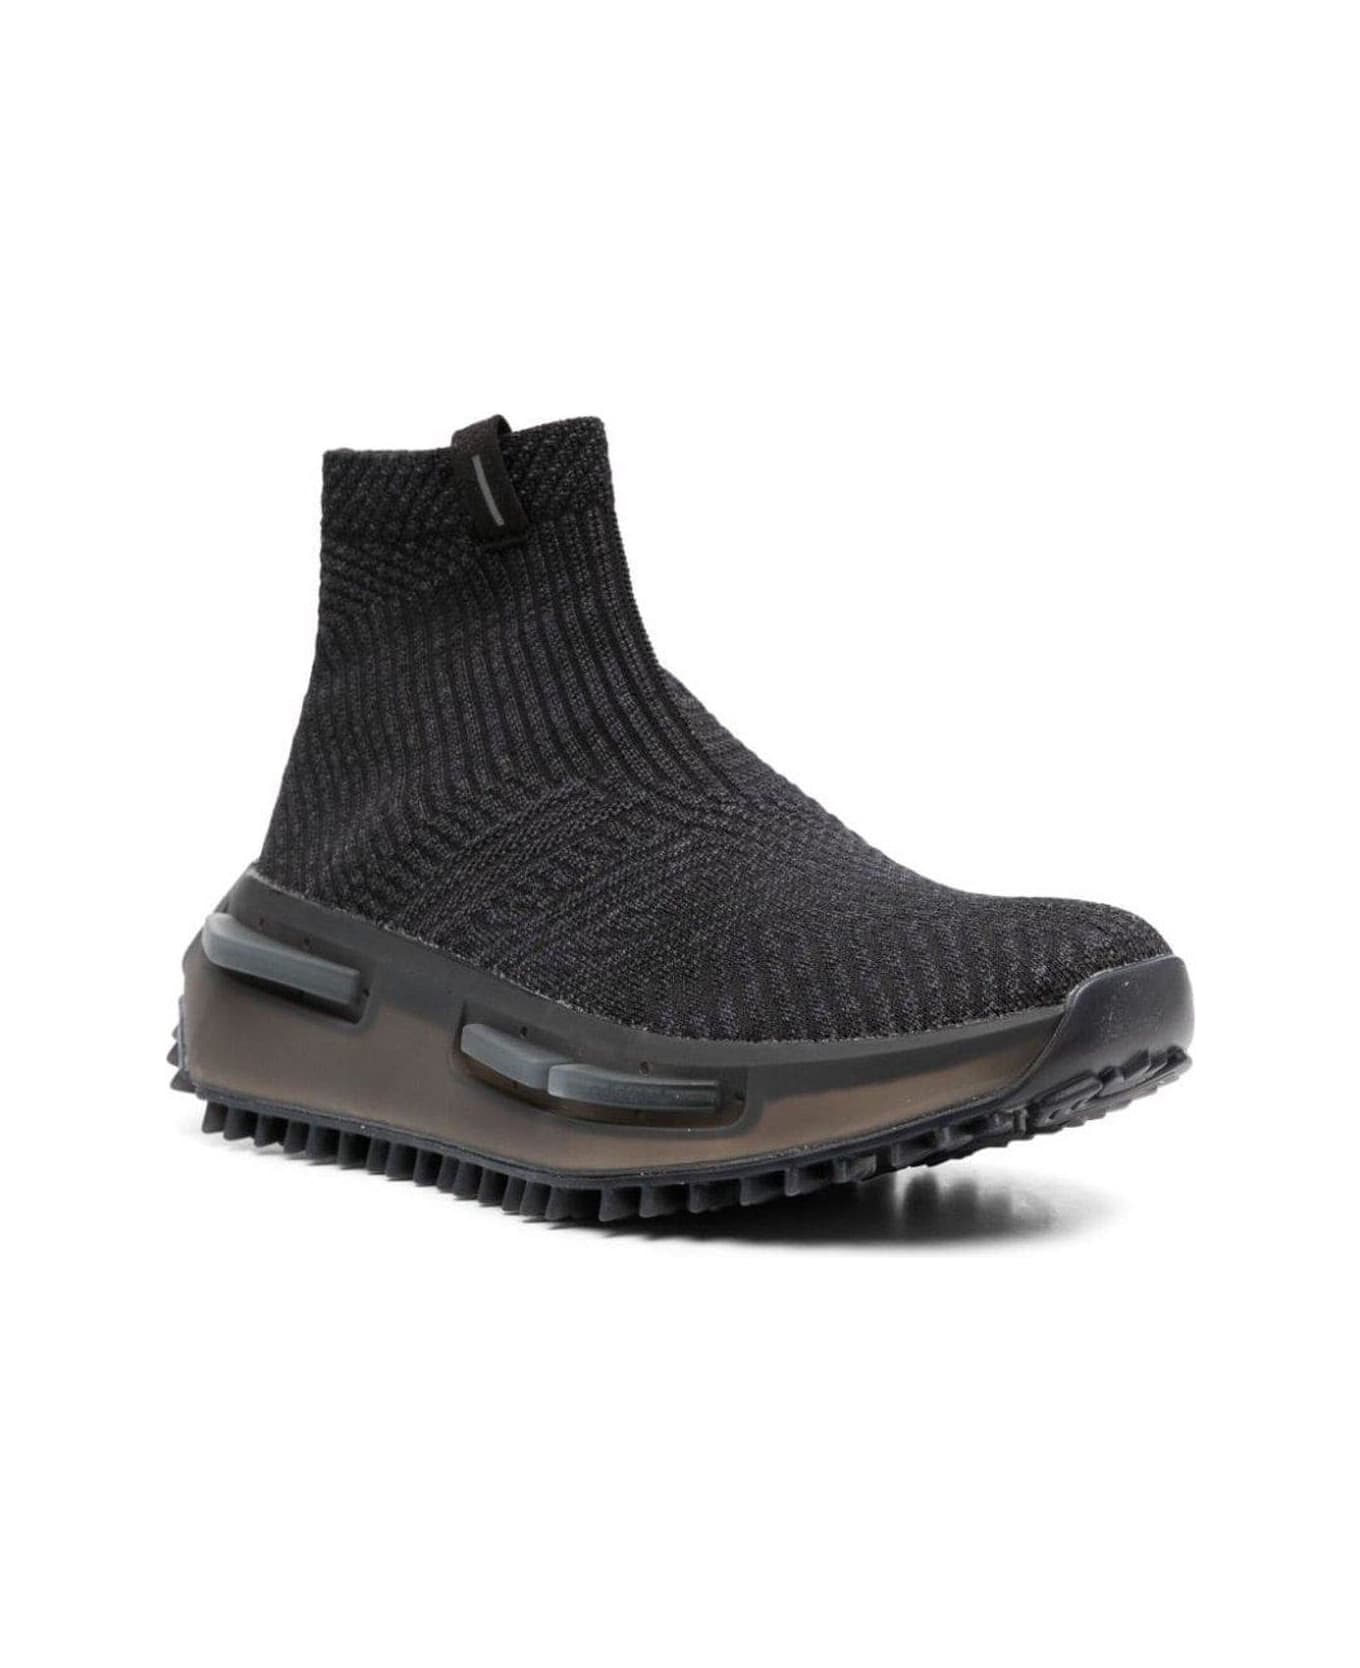 Adidas Originals Nmd_s1 Sock Sneakers - Black